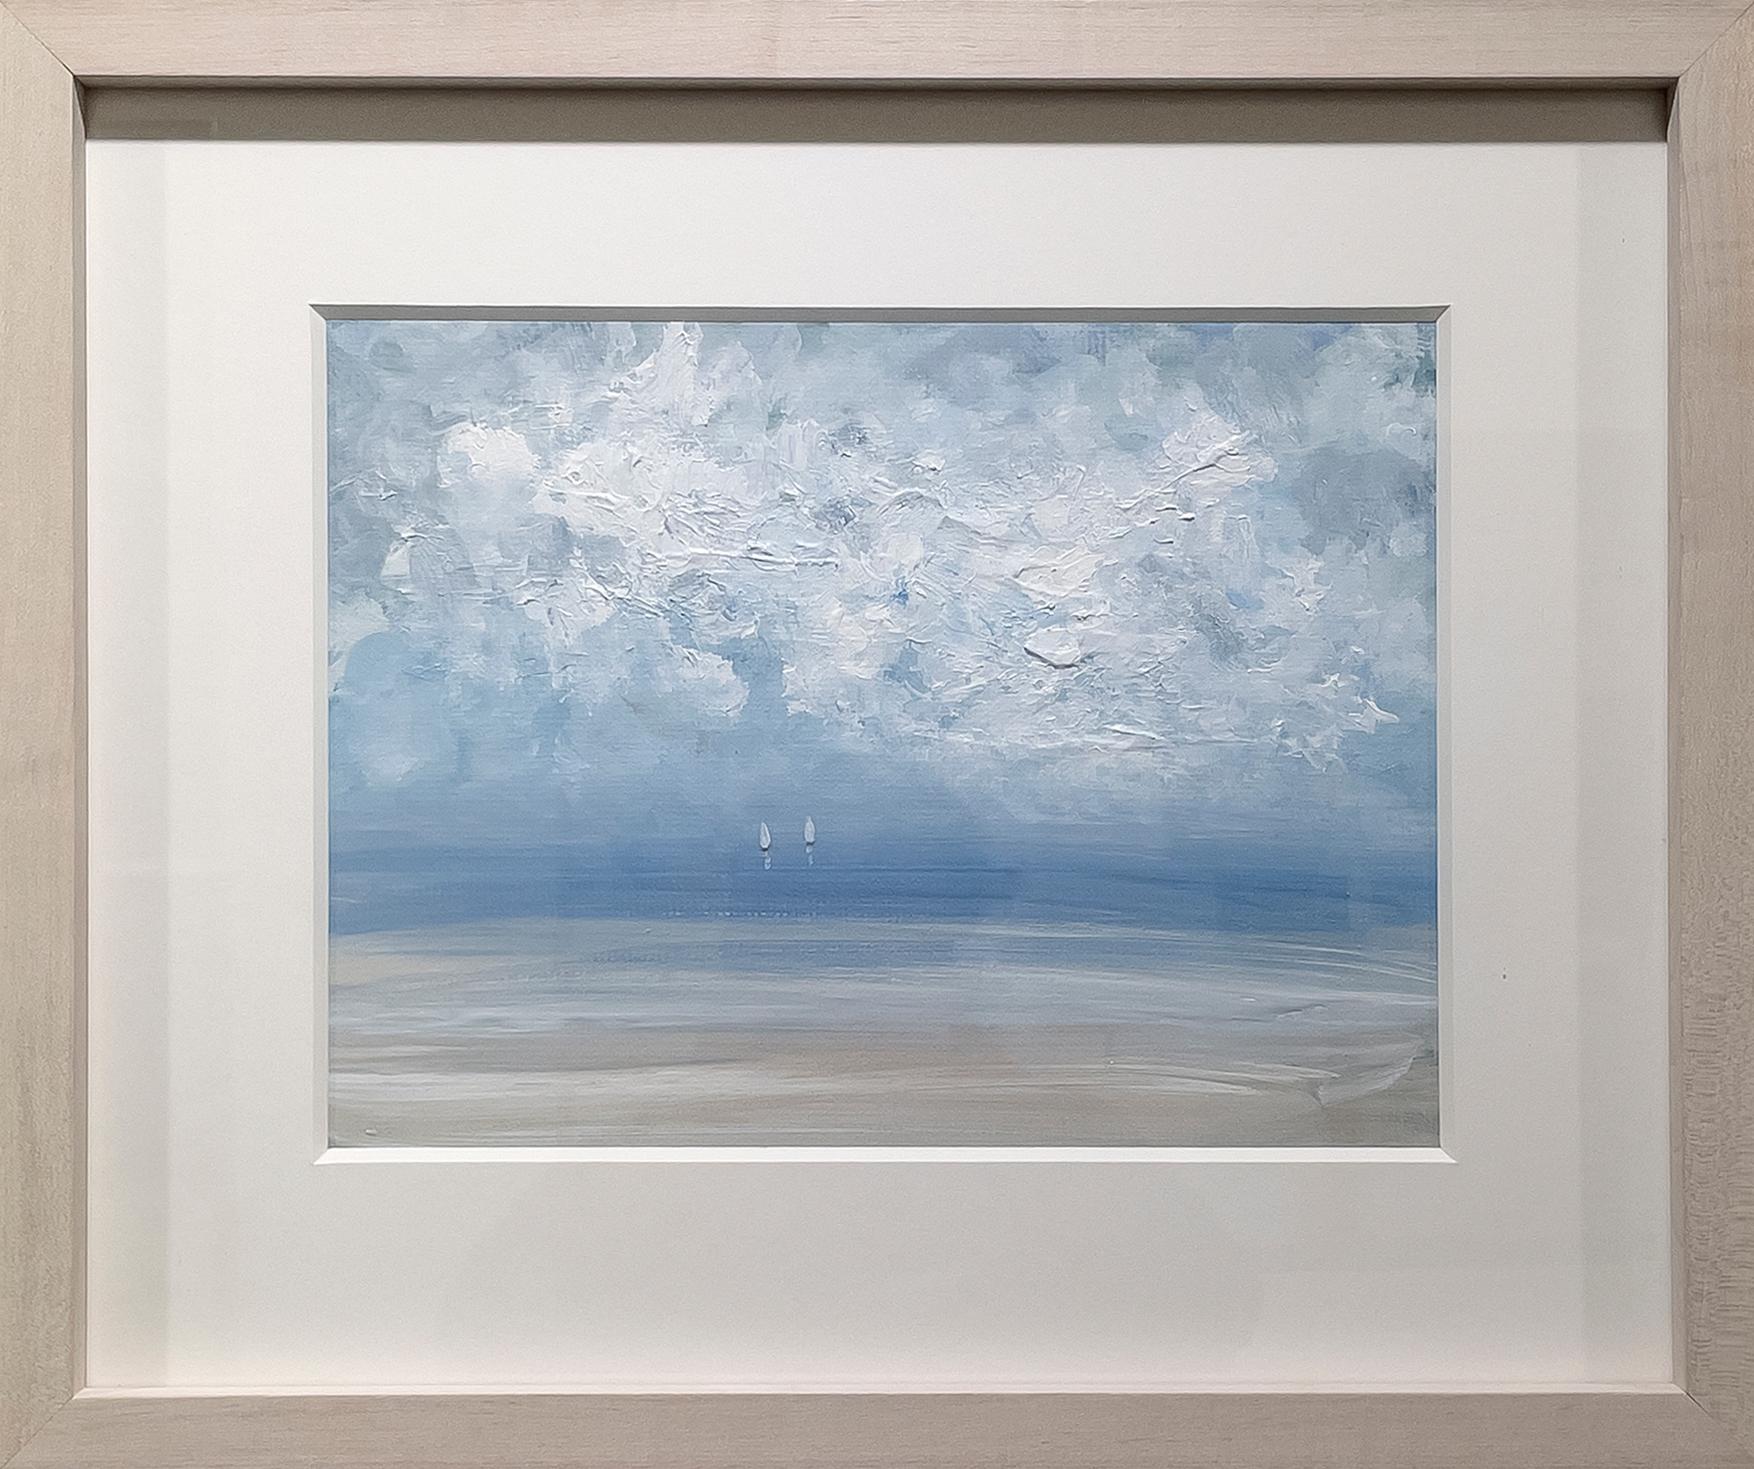 S. Cora Aldo Landscape Painting - "High Clouds, " Contemporary Seascape Painting